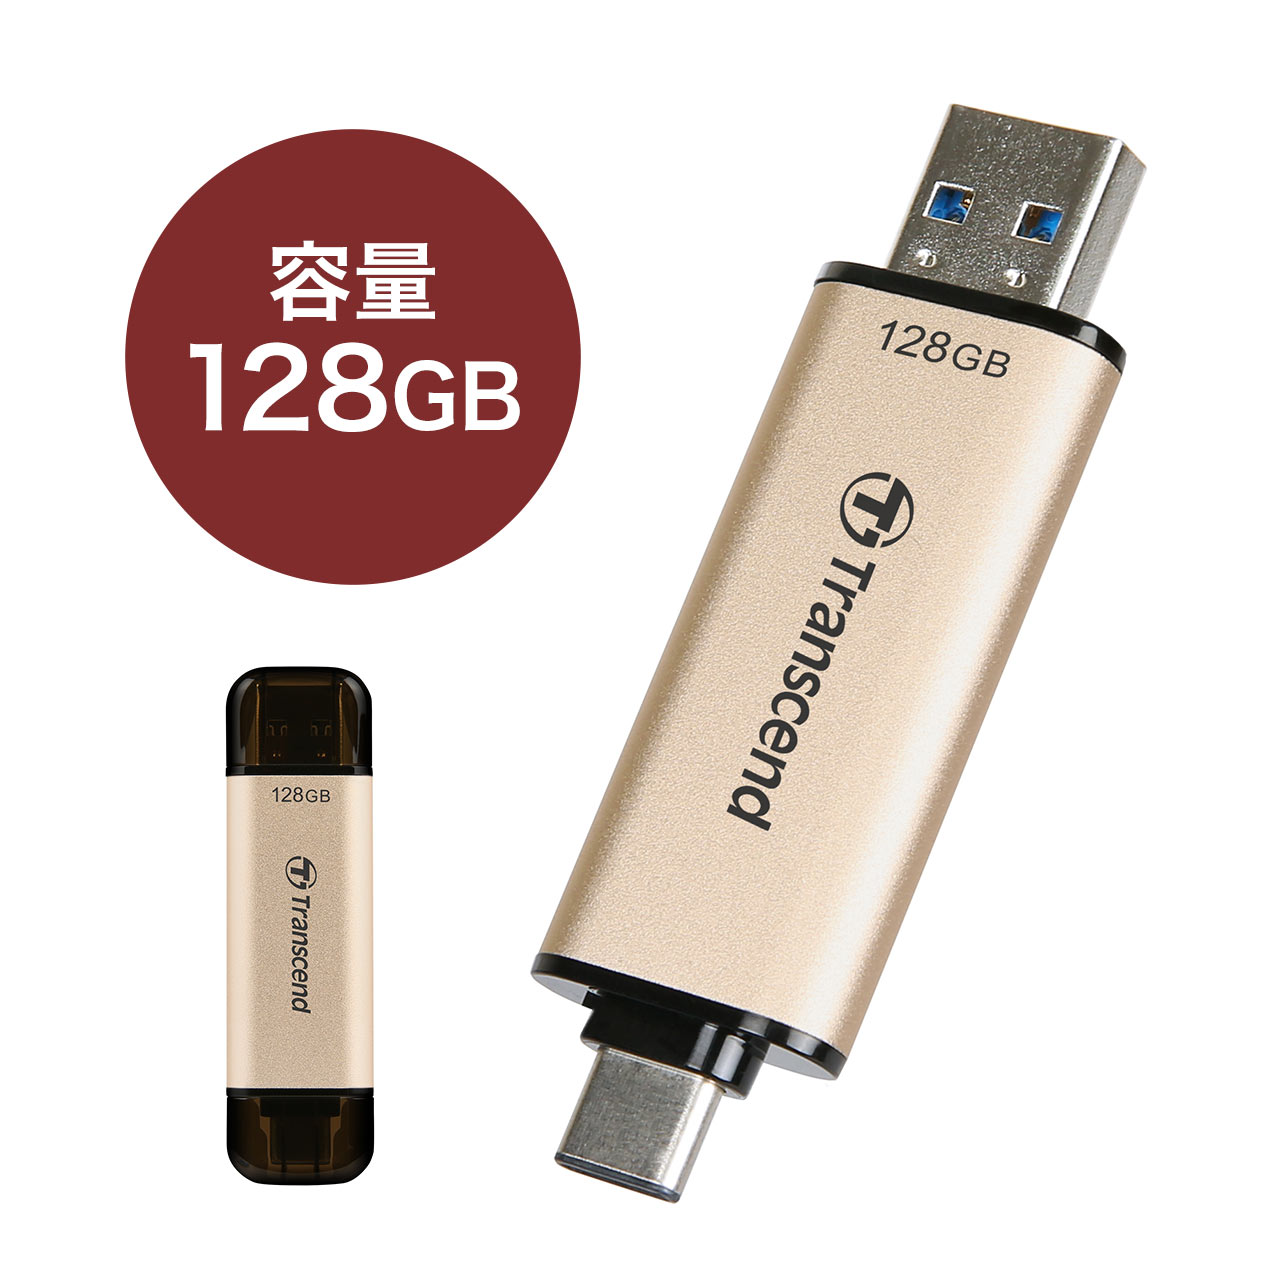 TS128GJF930C 激安超特価 トランセンド ネコポス対応 送料無料 超激安 Transcend USBメモリ 128GB Gen1 USB3.2 930C JetFlash